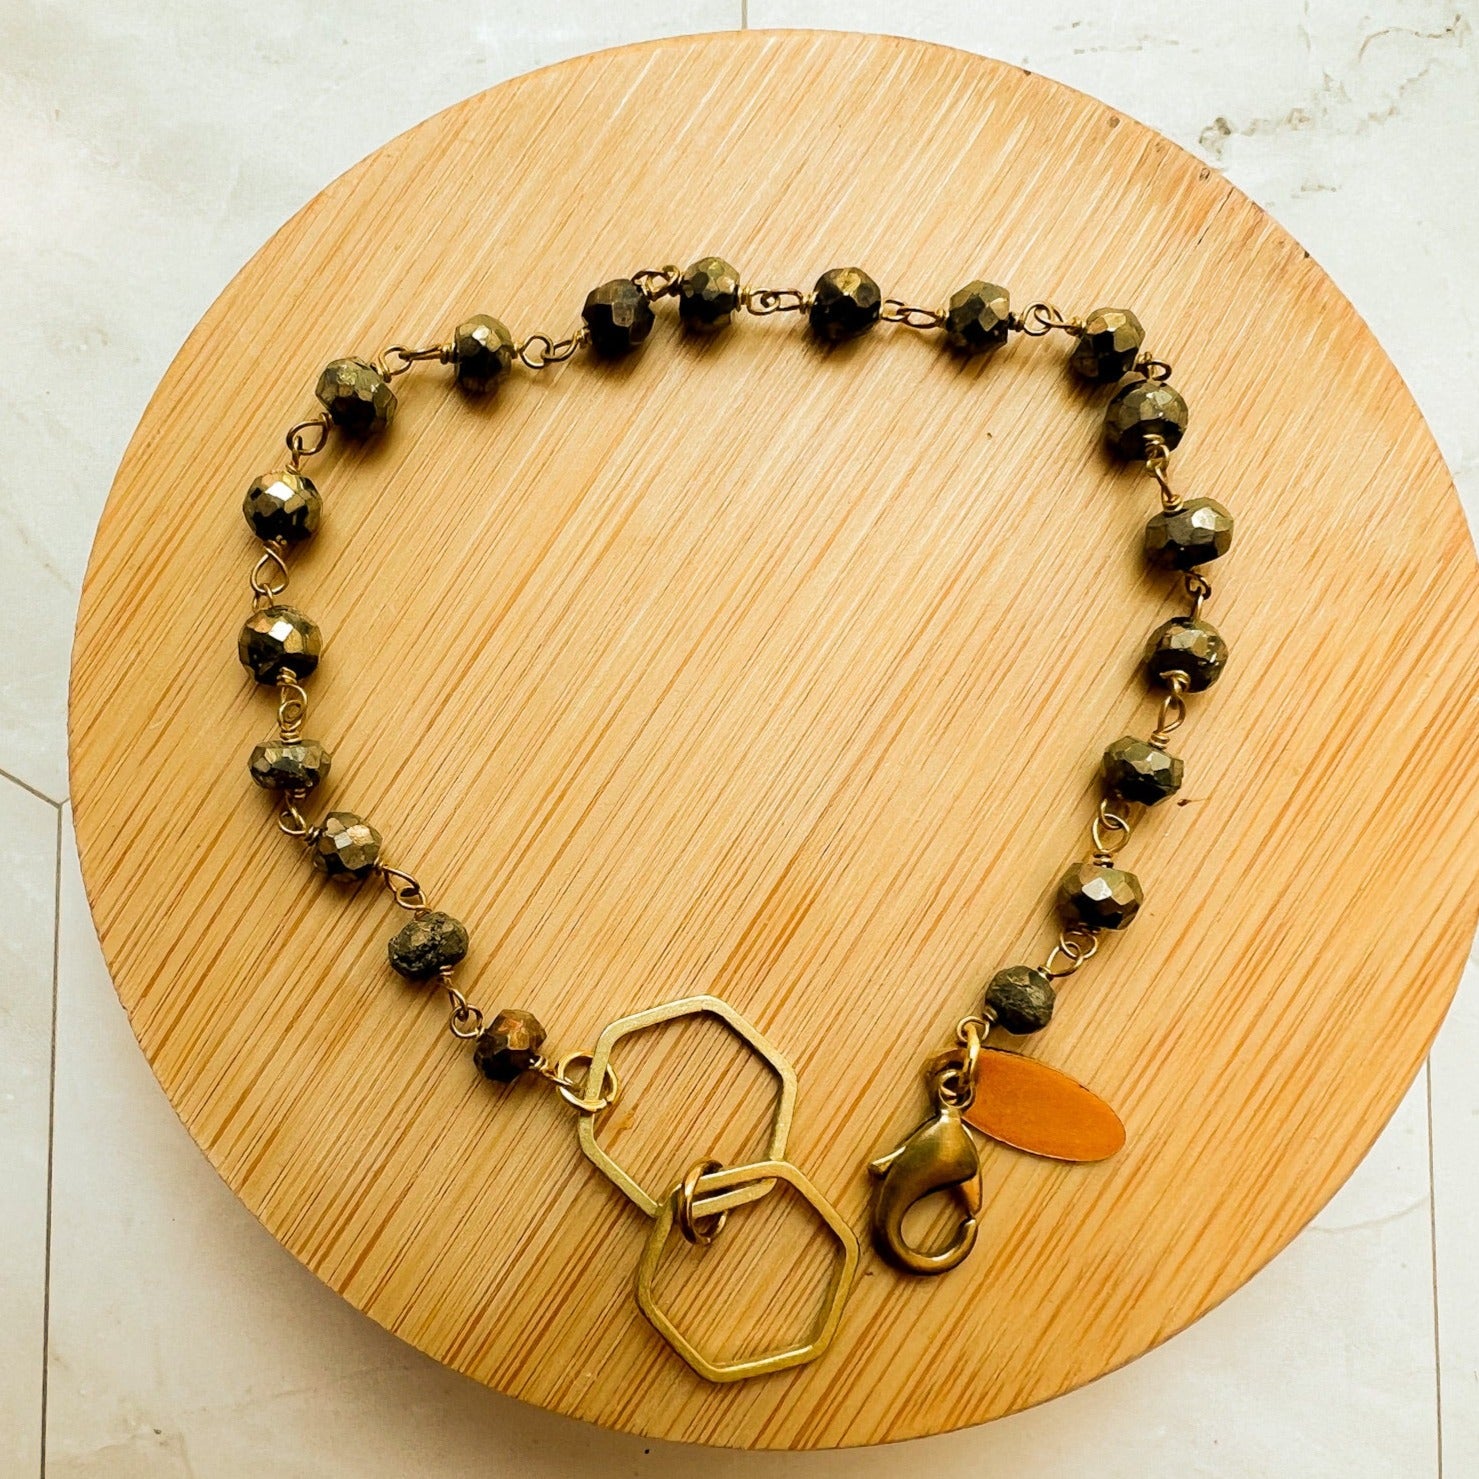 Gemstone Rosary Chain Bracelet - Labradorite or Pyrite